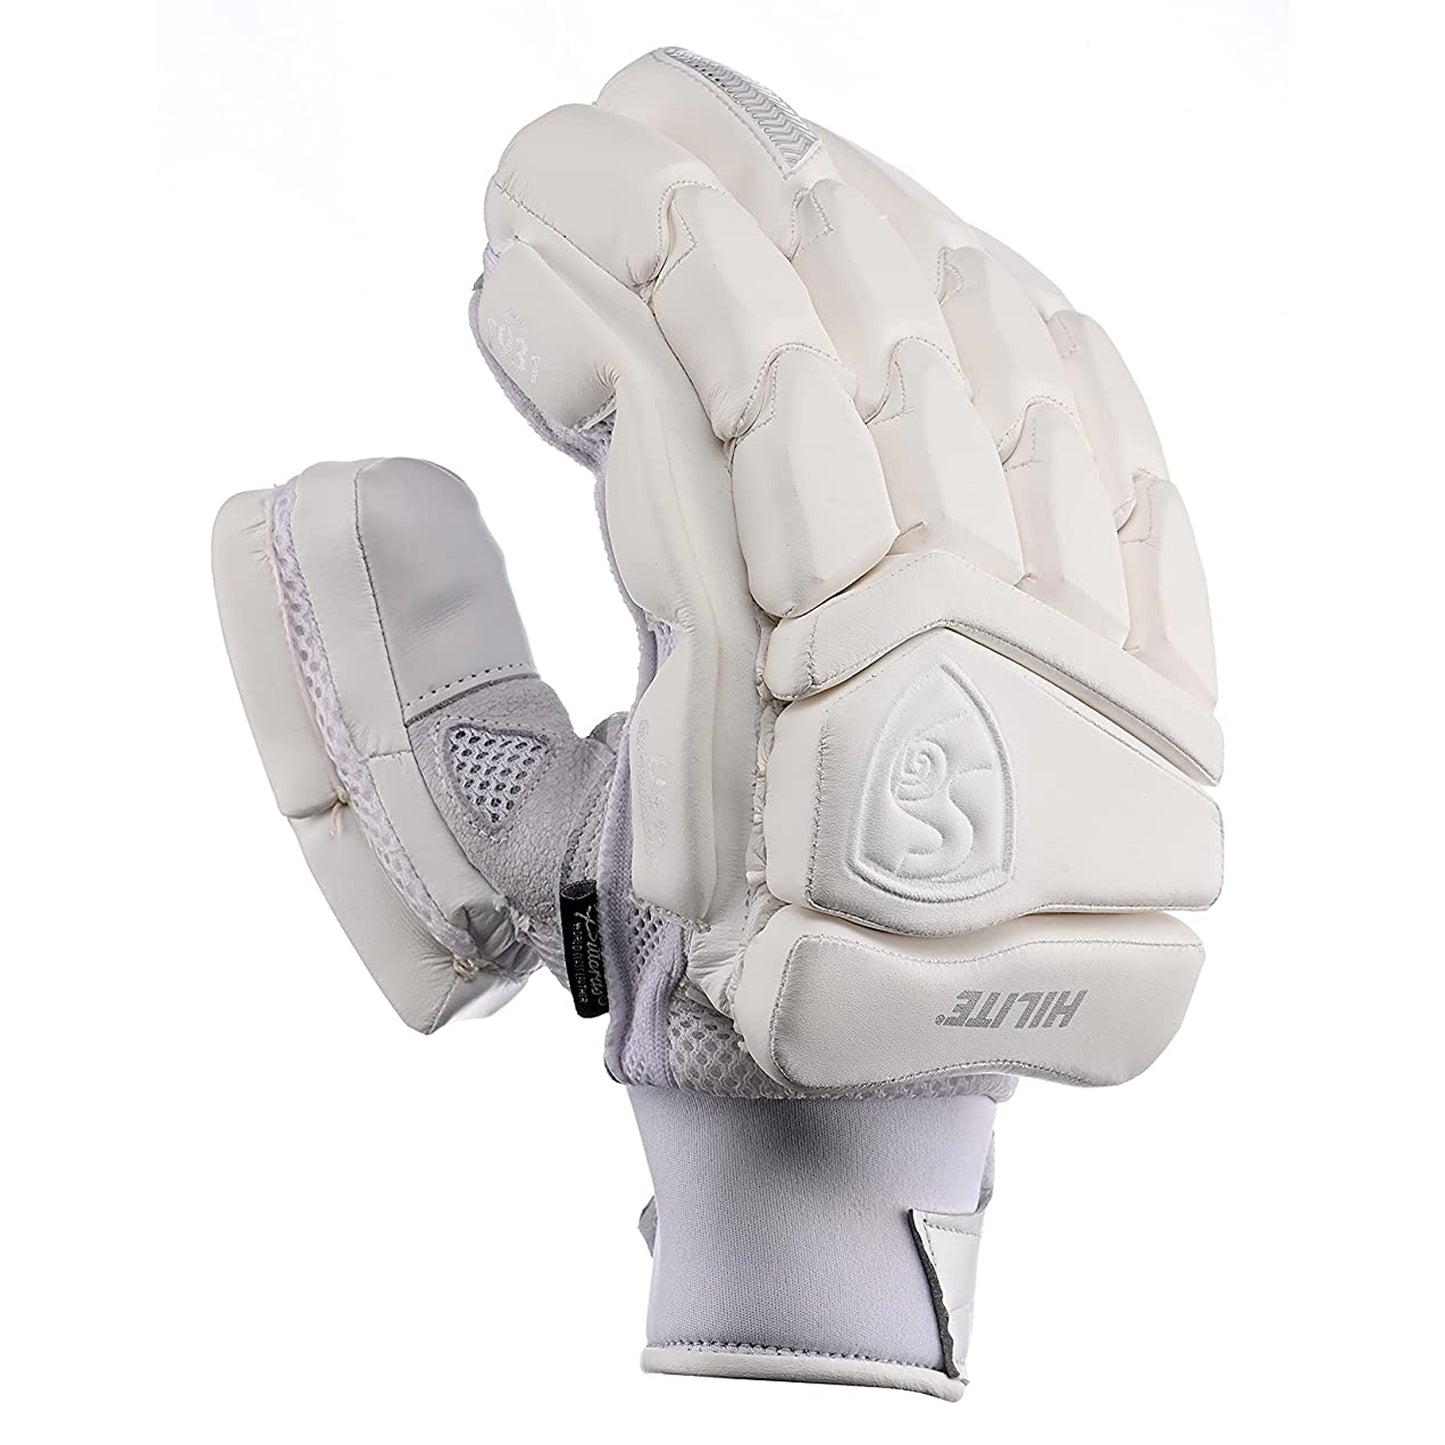 SG Hilite White Batting Gloves - Right Hand - Best Price online Prokicksports.com